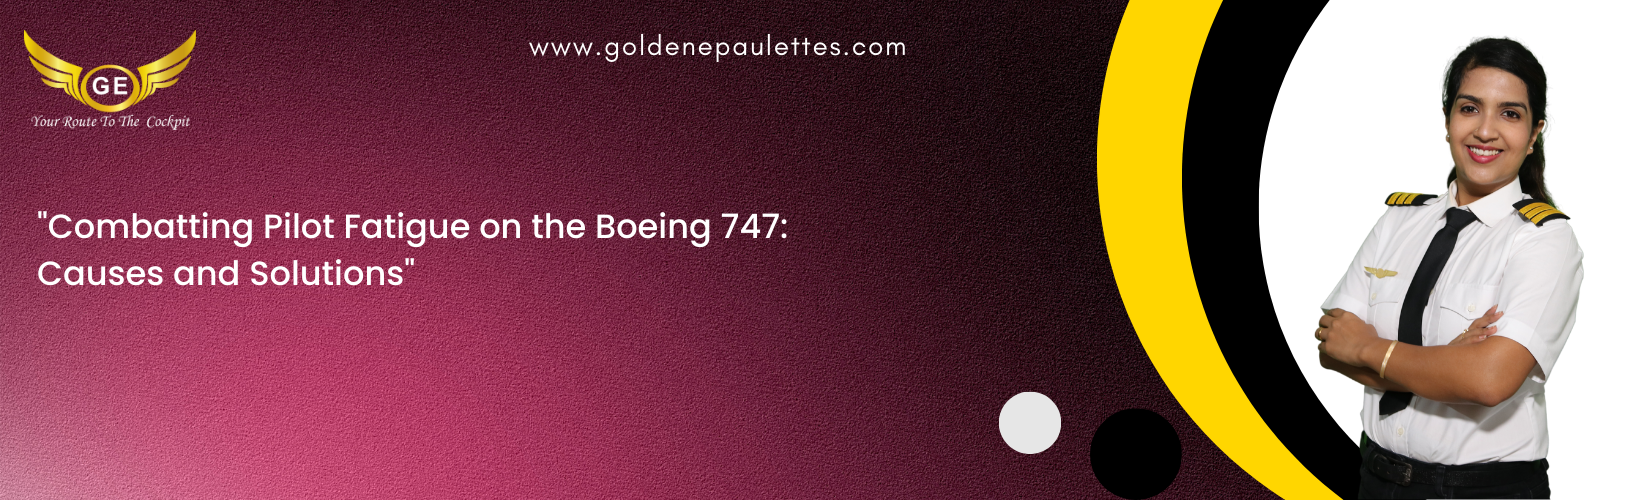 Boeing 747 Pilot Fatigue